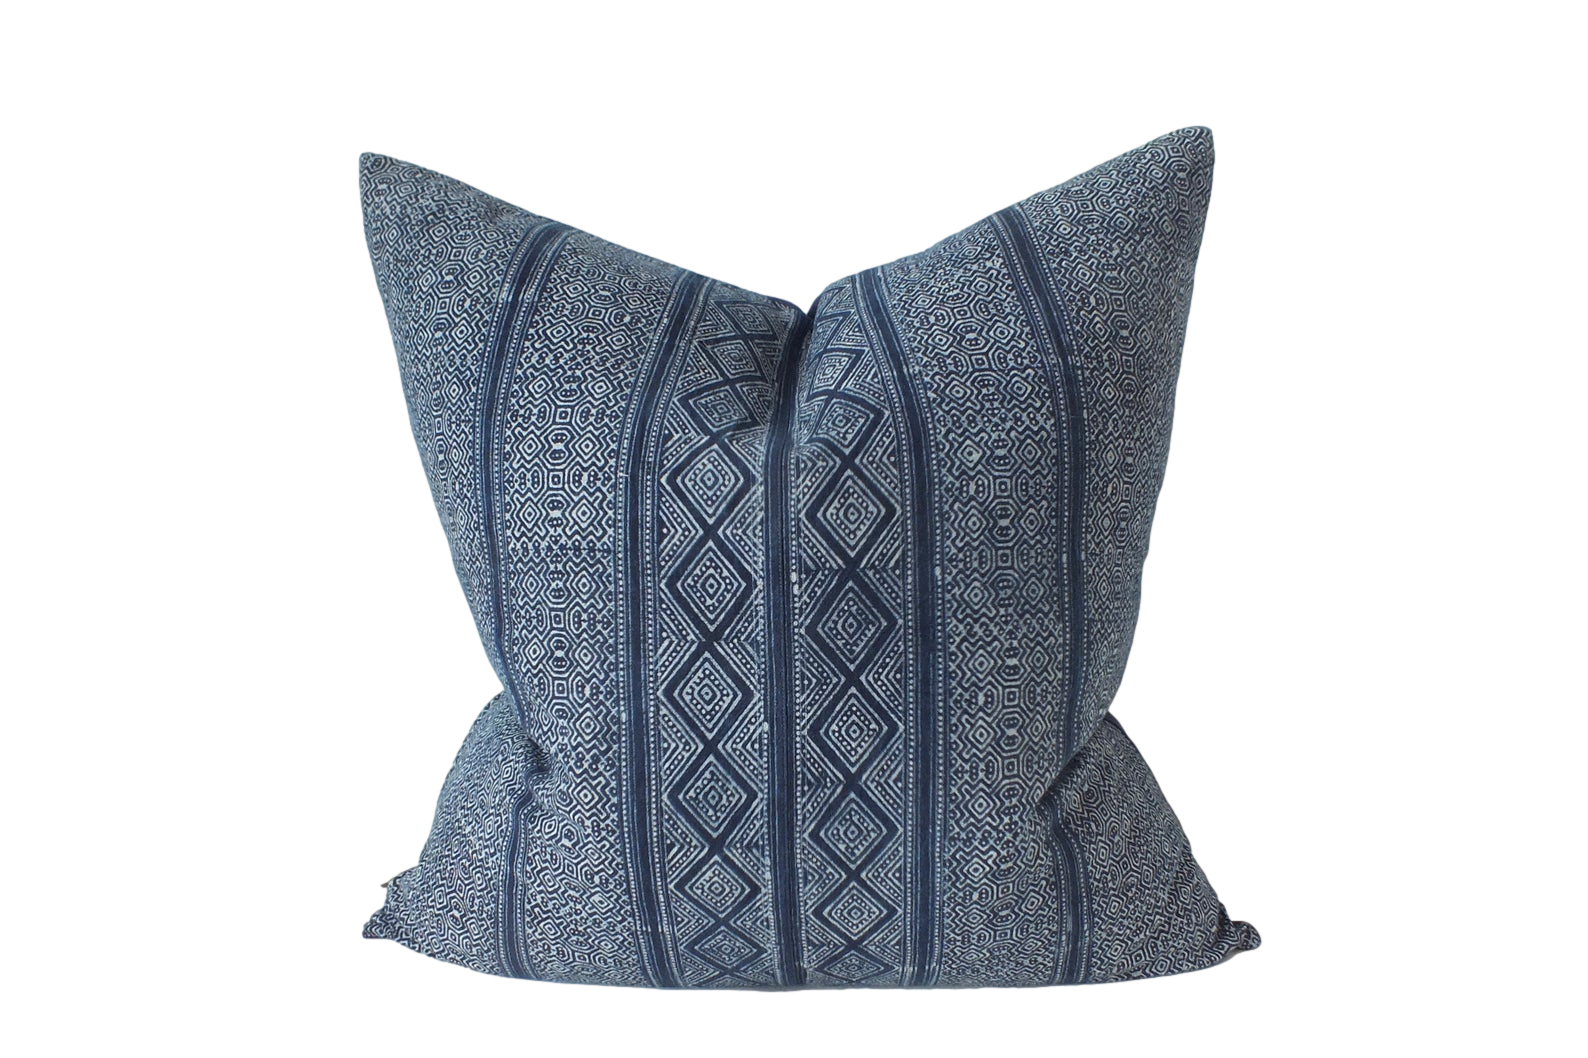 Hmong pillow cover